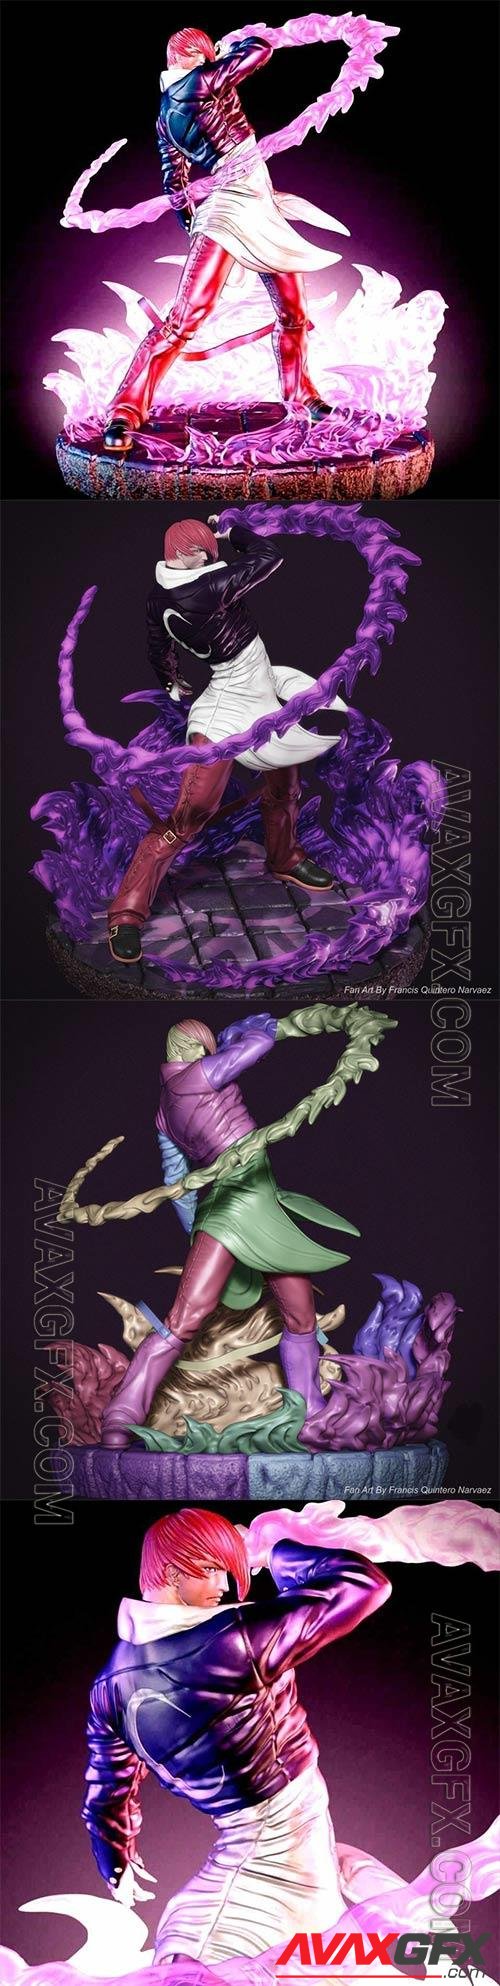 Iori Yagami - King of Fighters 3D Print Model